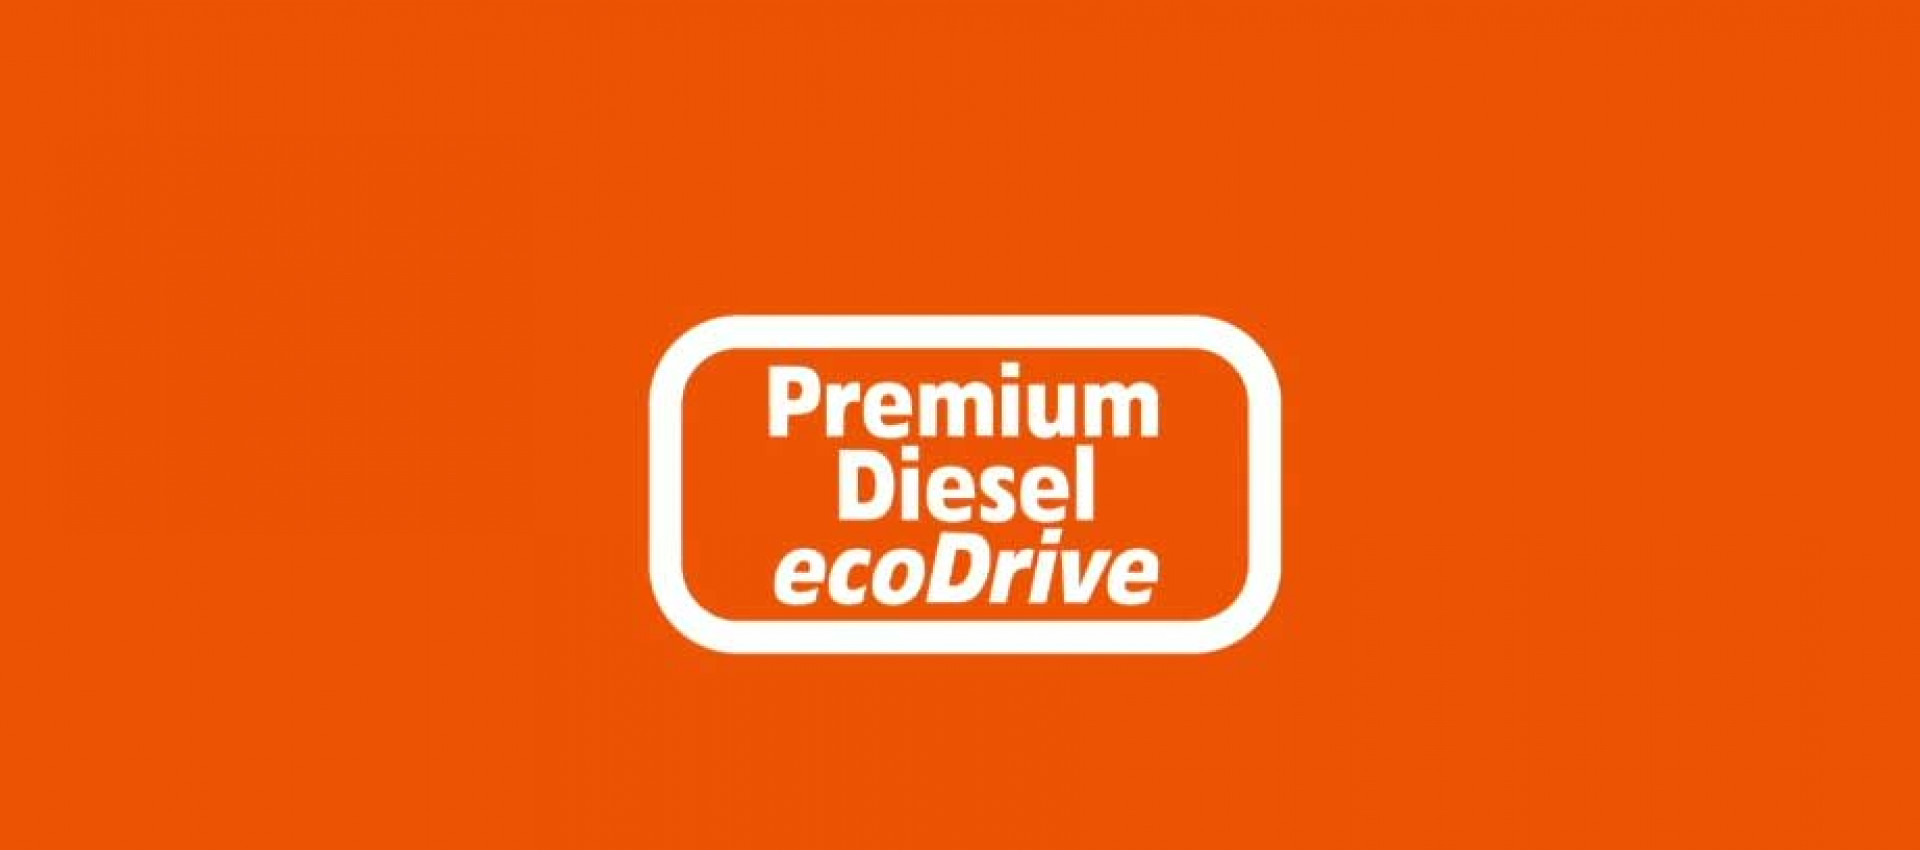 Premium Diesel ecoDrive